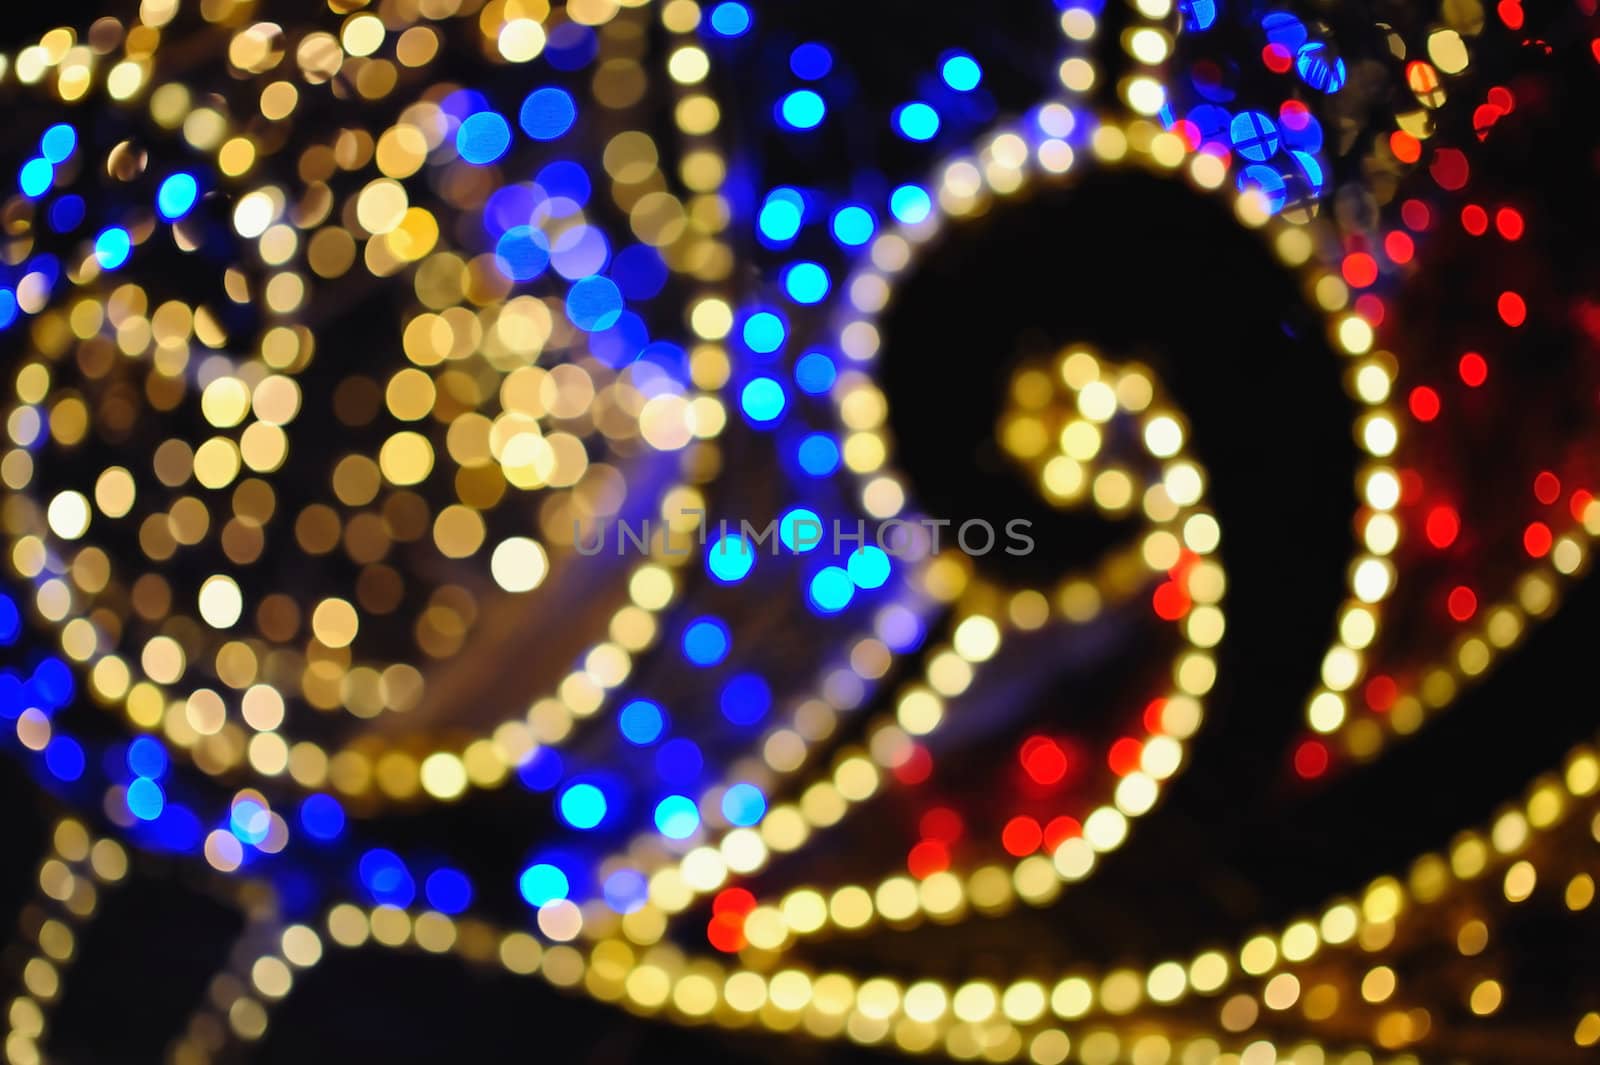 Abstract christmas tree lighting in Bangkok. by ngungfoto